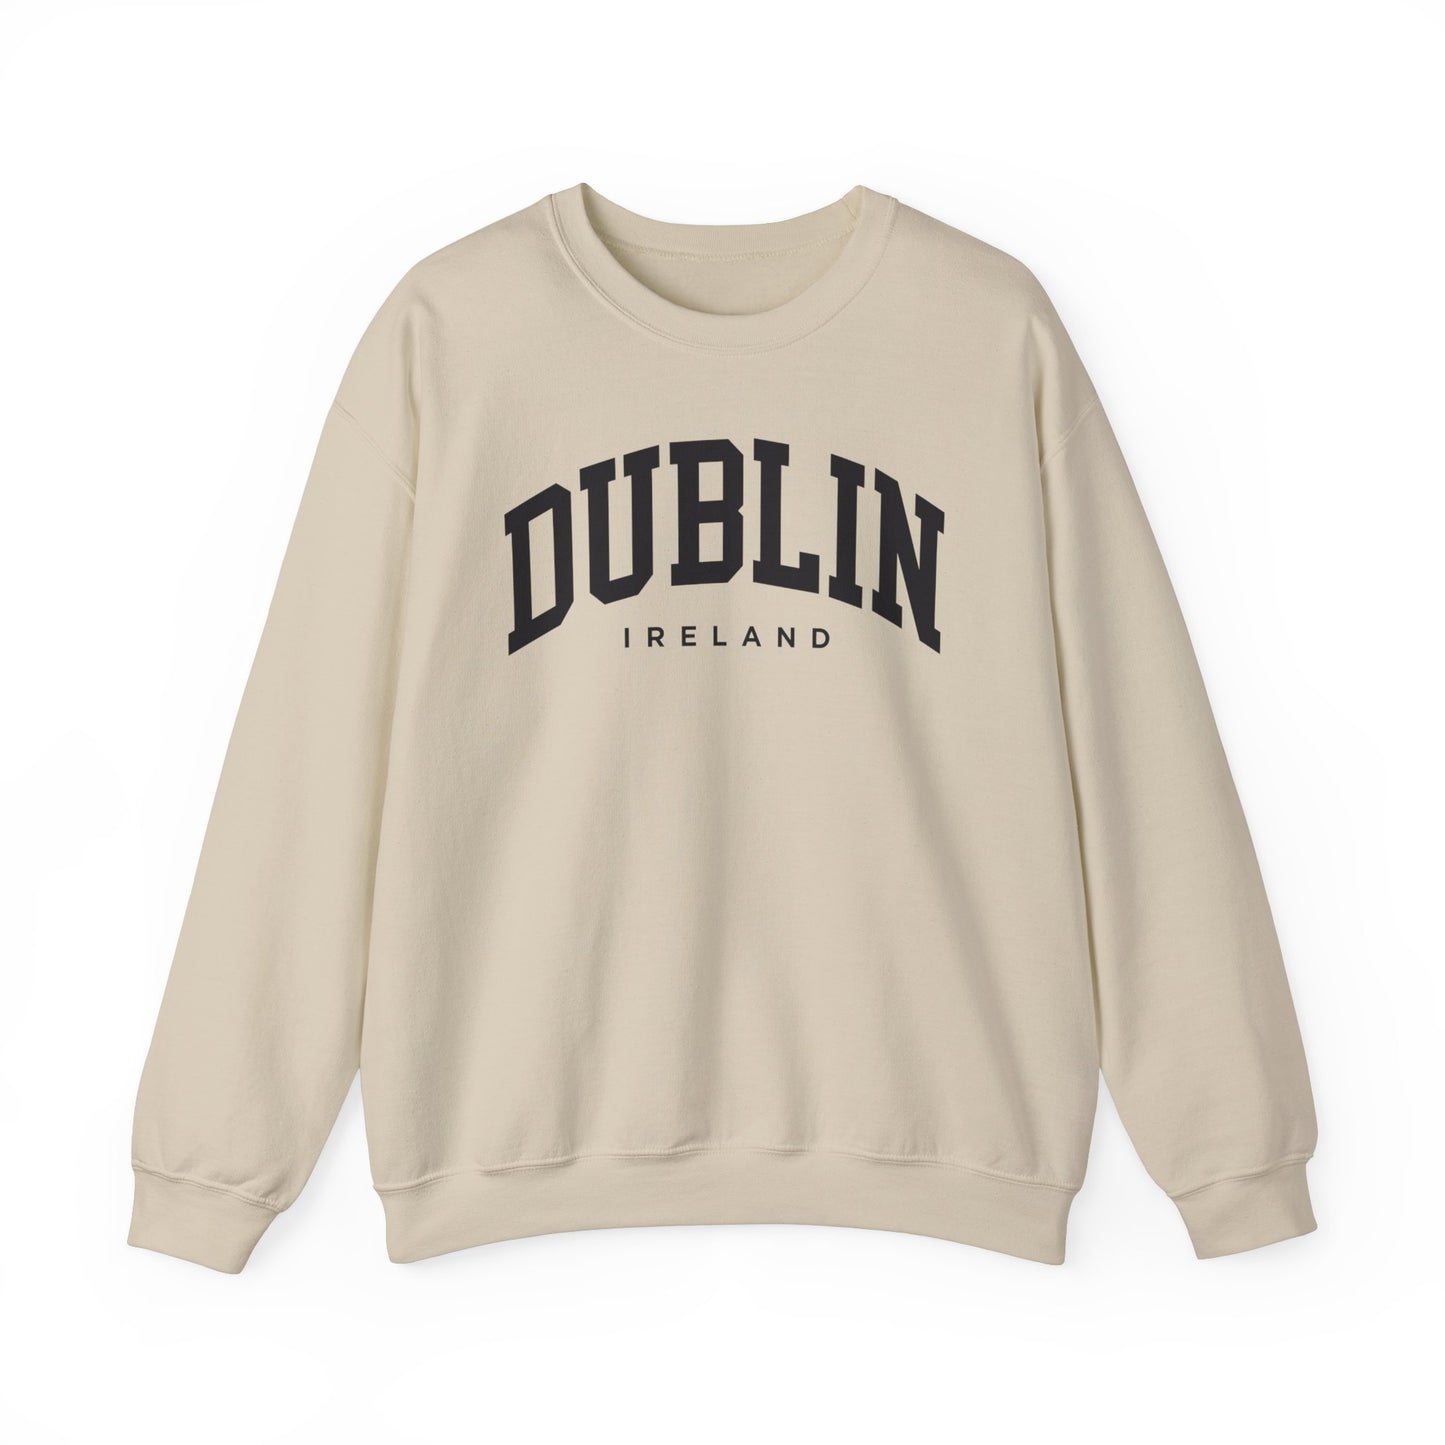 Dublin Ireland Sweatshirt